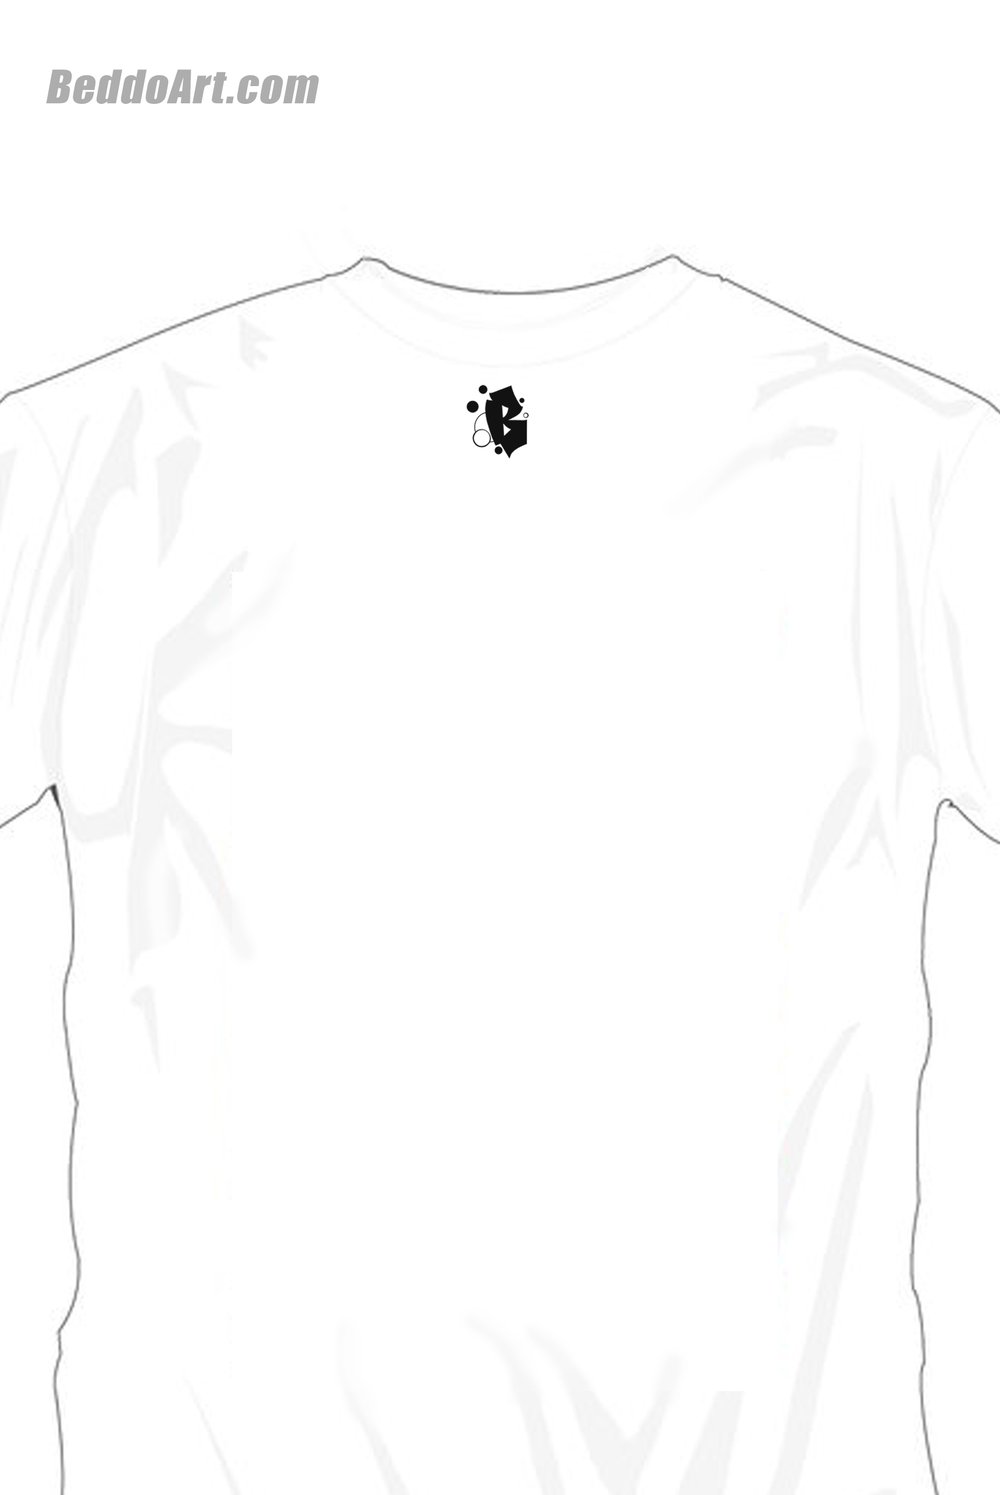 The Golden Age (black & white version) T-shirt by Beddo